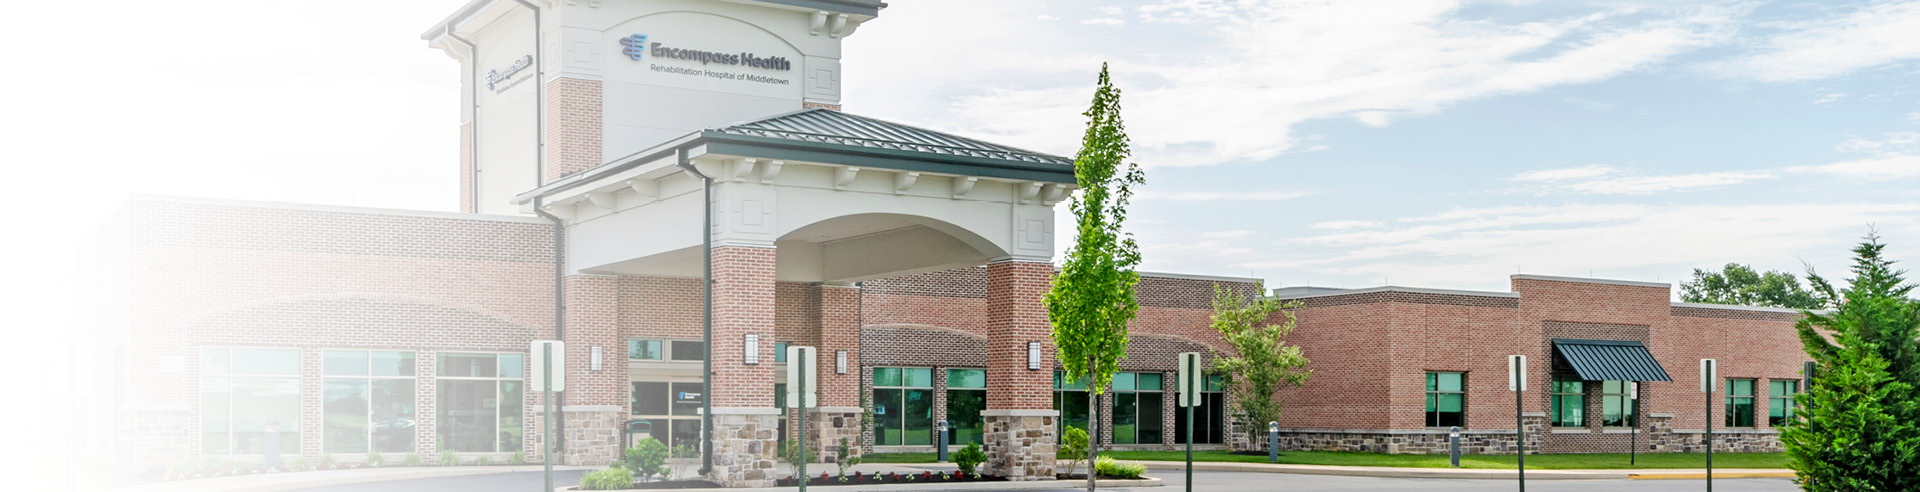 Encompass Health Rehabilitation Hospital of Middletown exterior